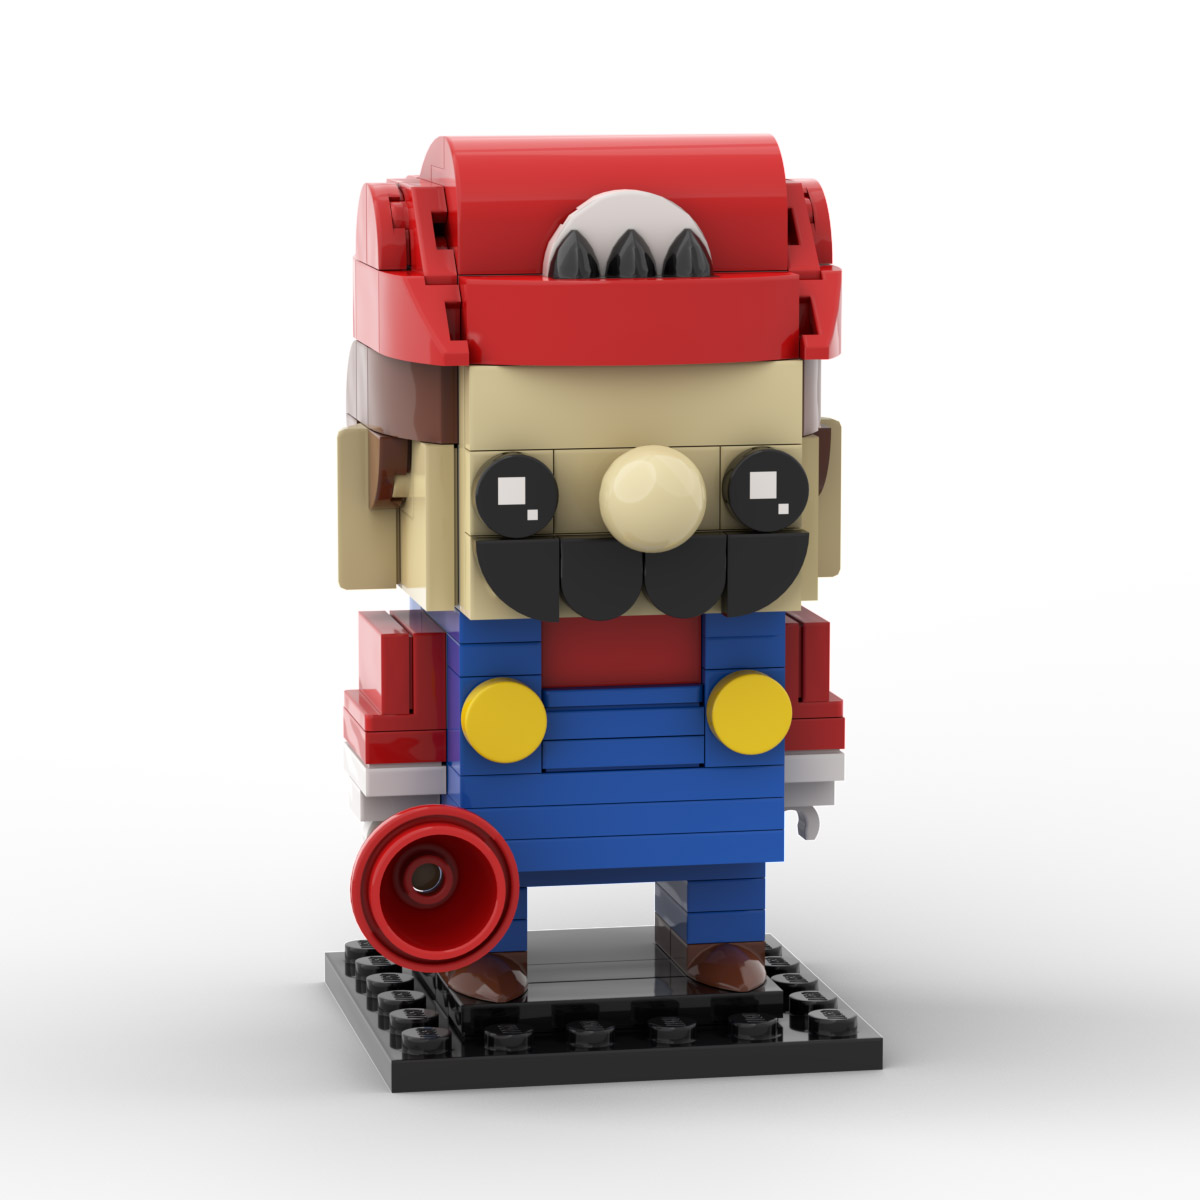 Mario Lego custom Instructions - Super Mario Bros